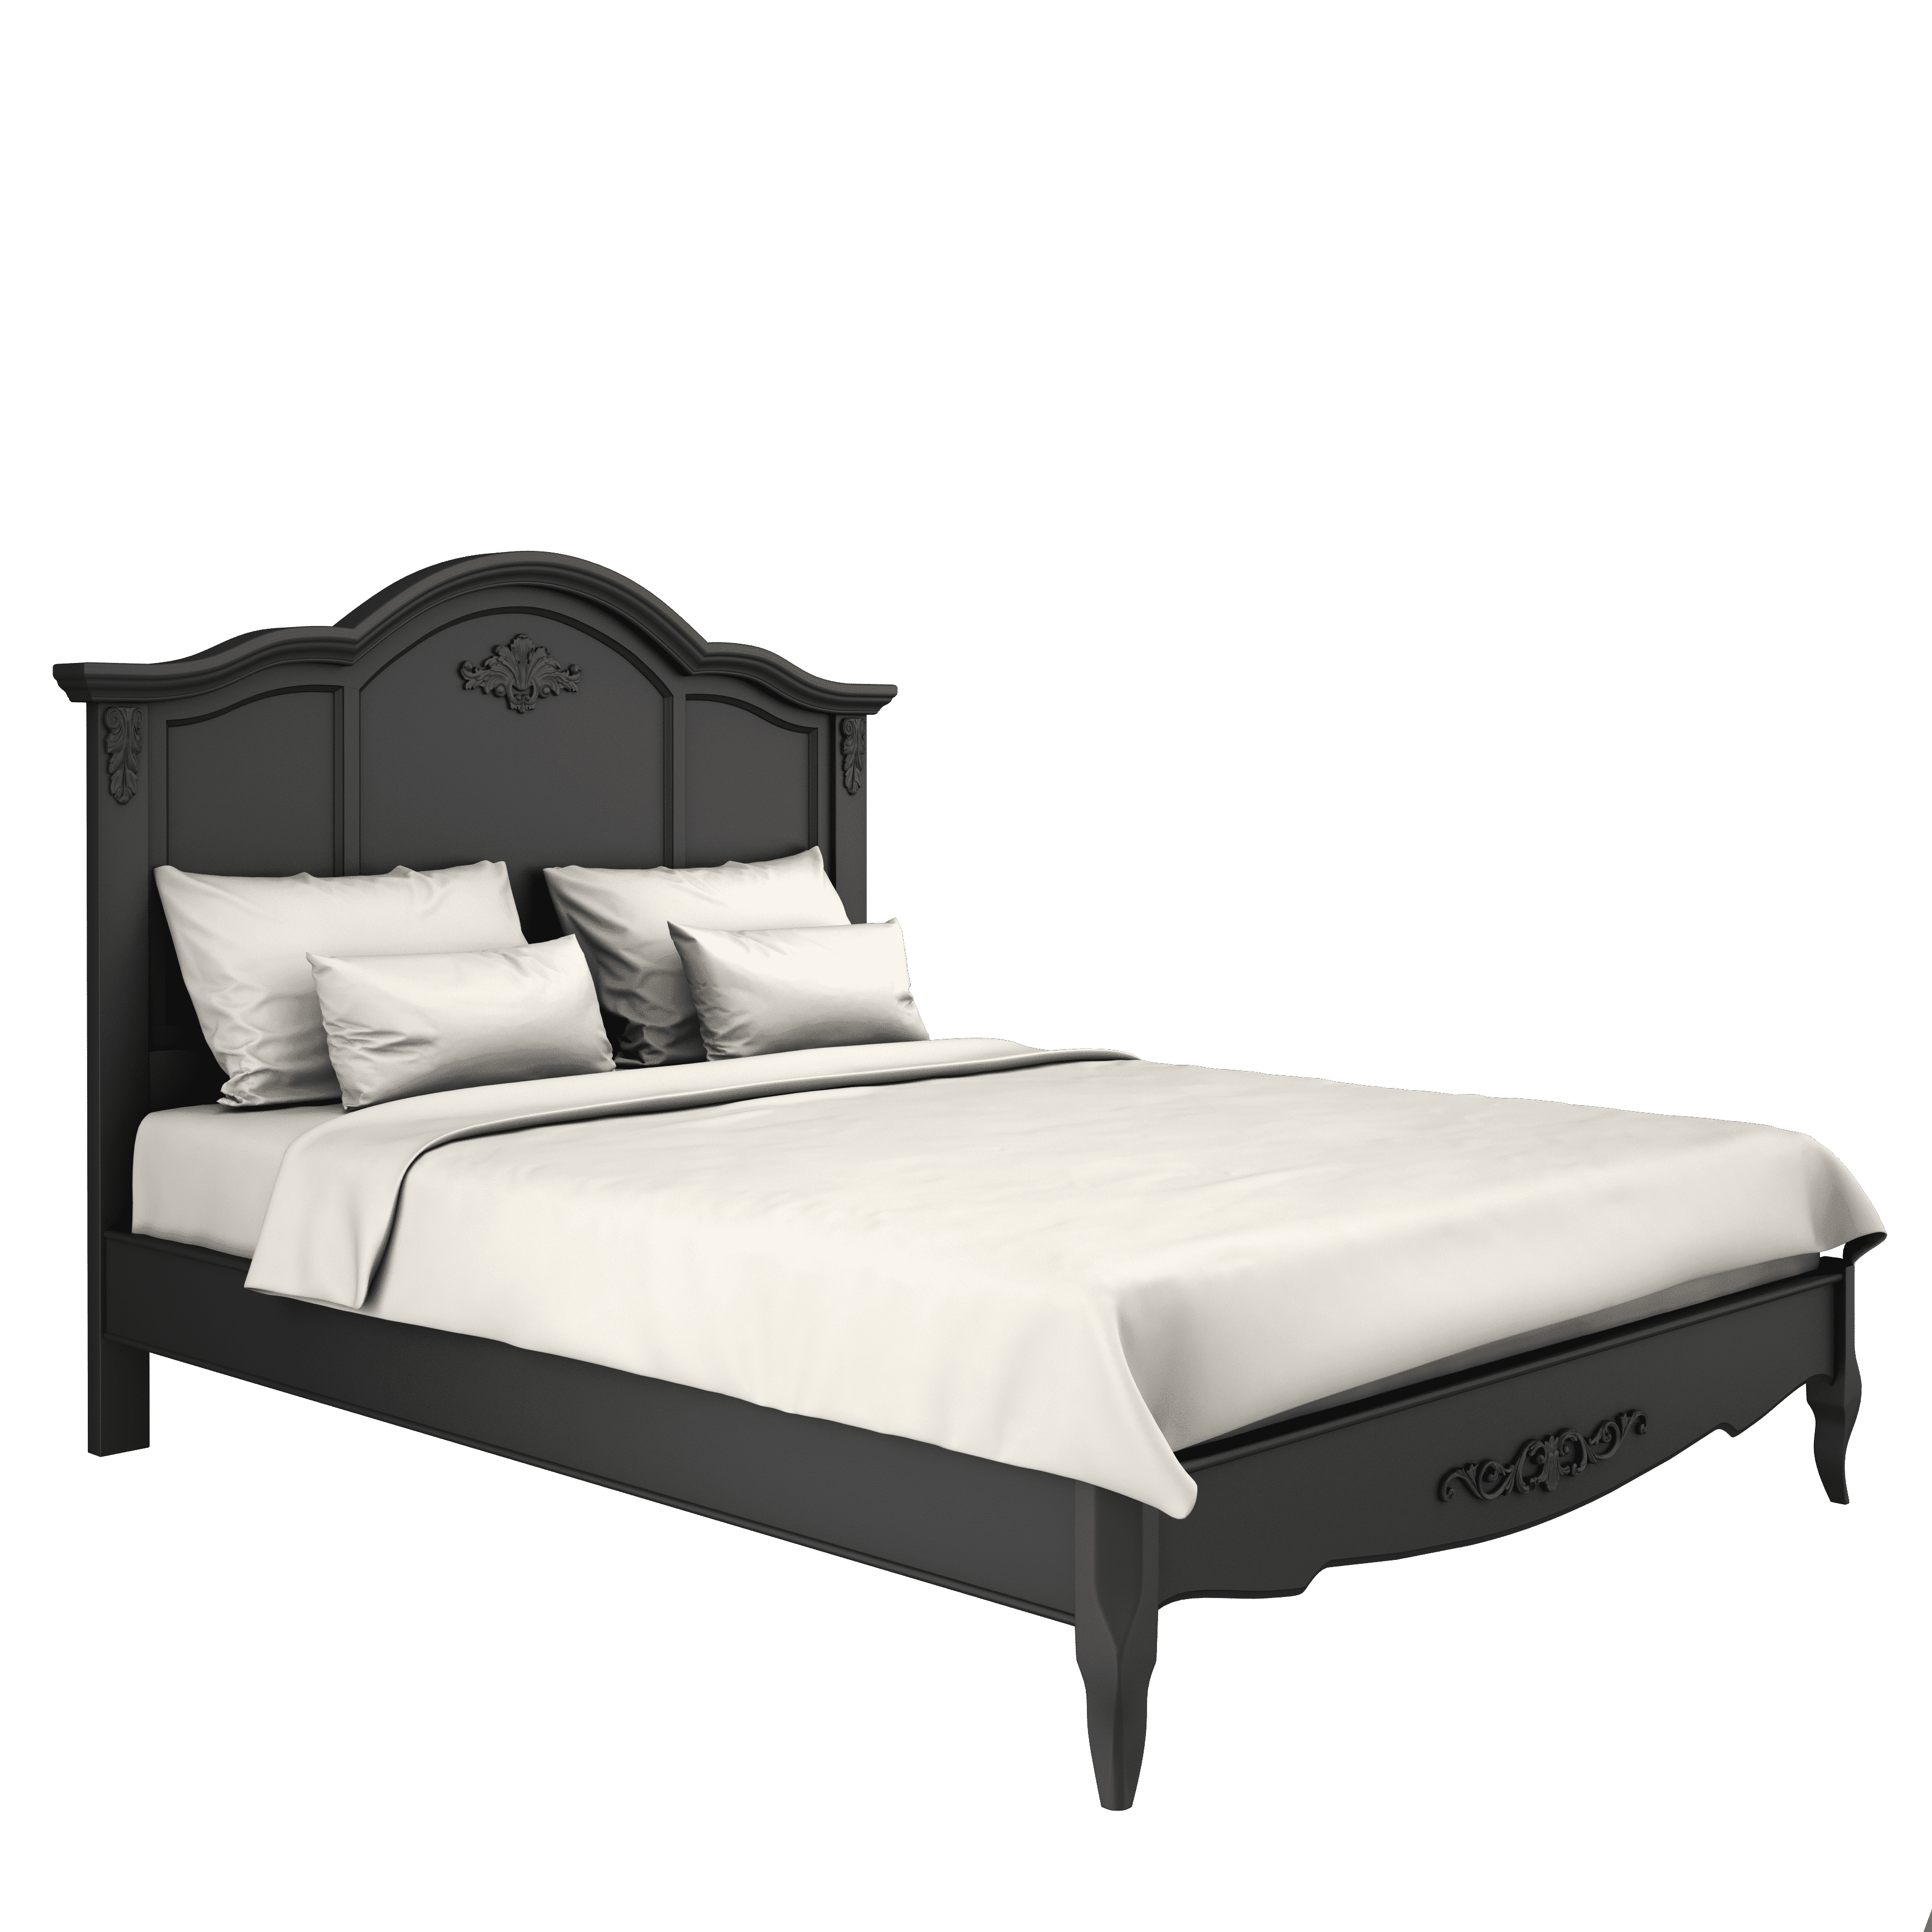 Кровать Aletan Provence, двуспальная, 160x200 см, цвет: черный, размер 178х211х129 см (B206BL)B206BL